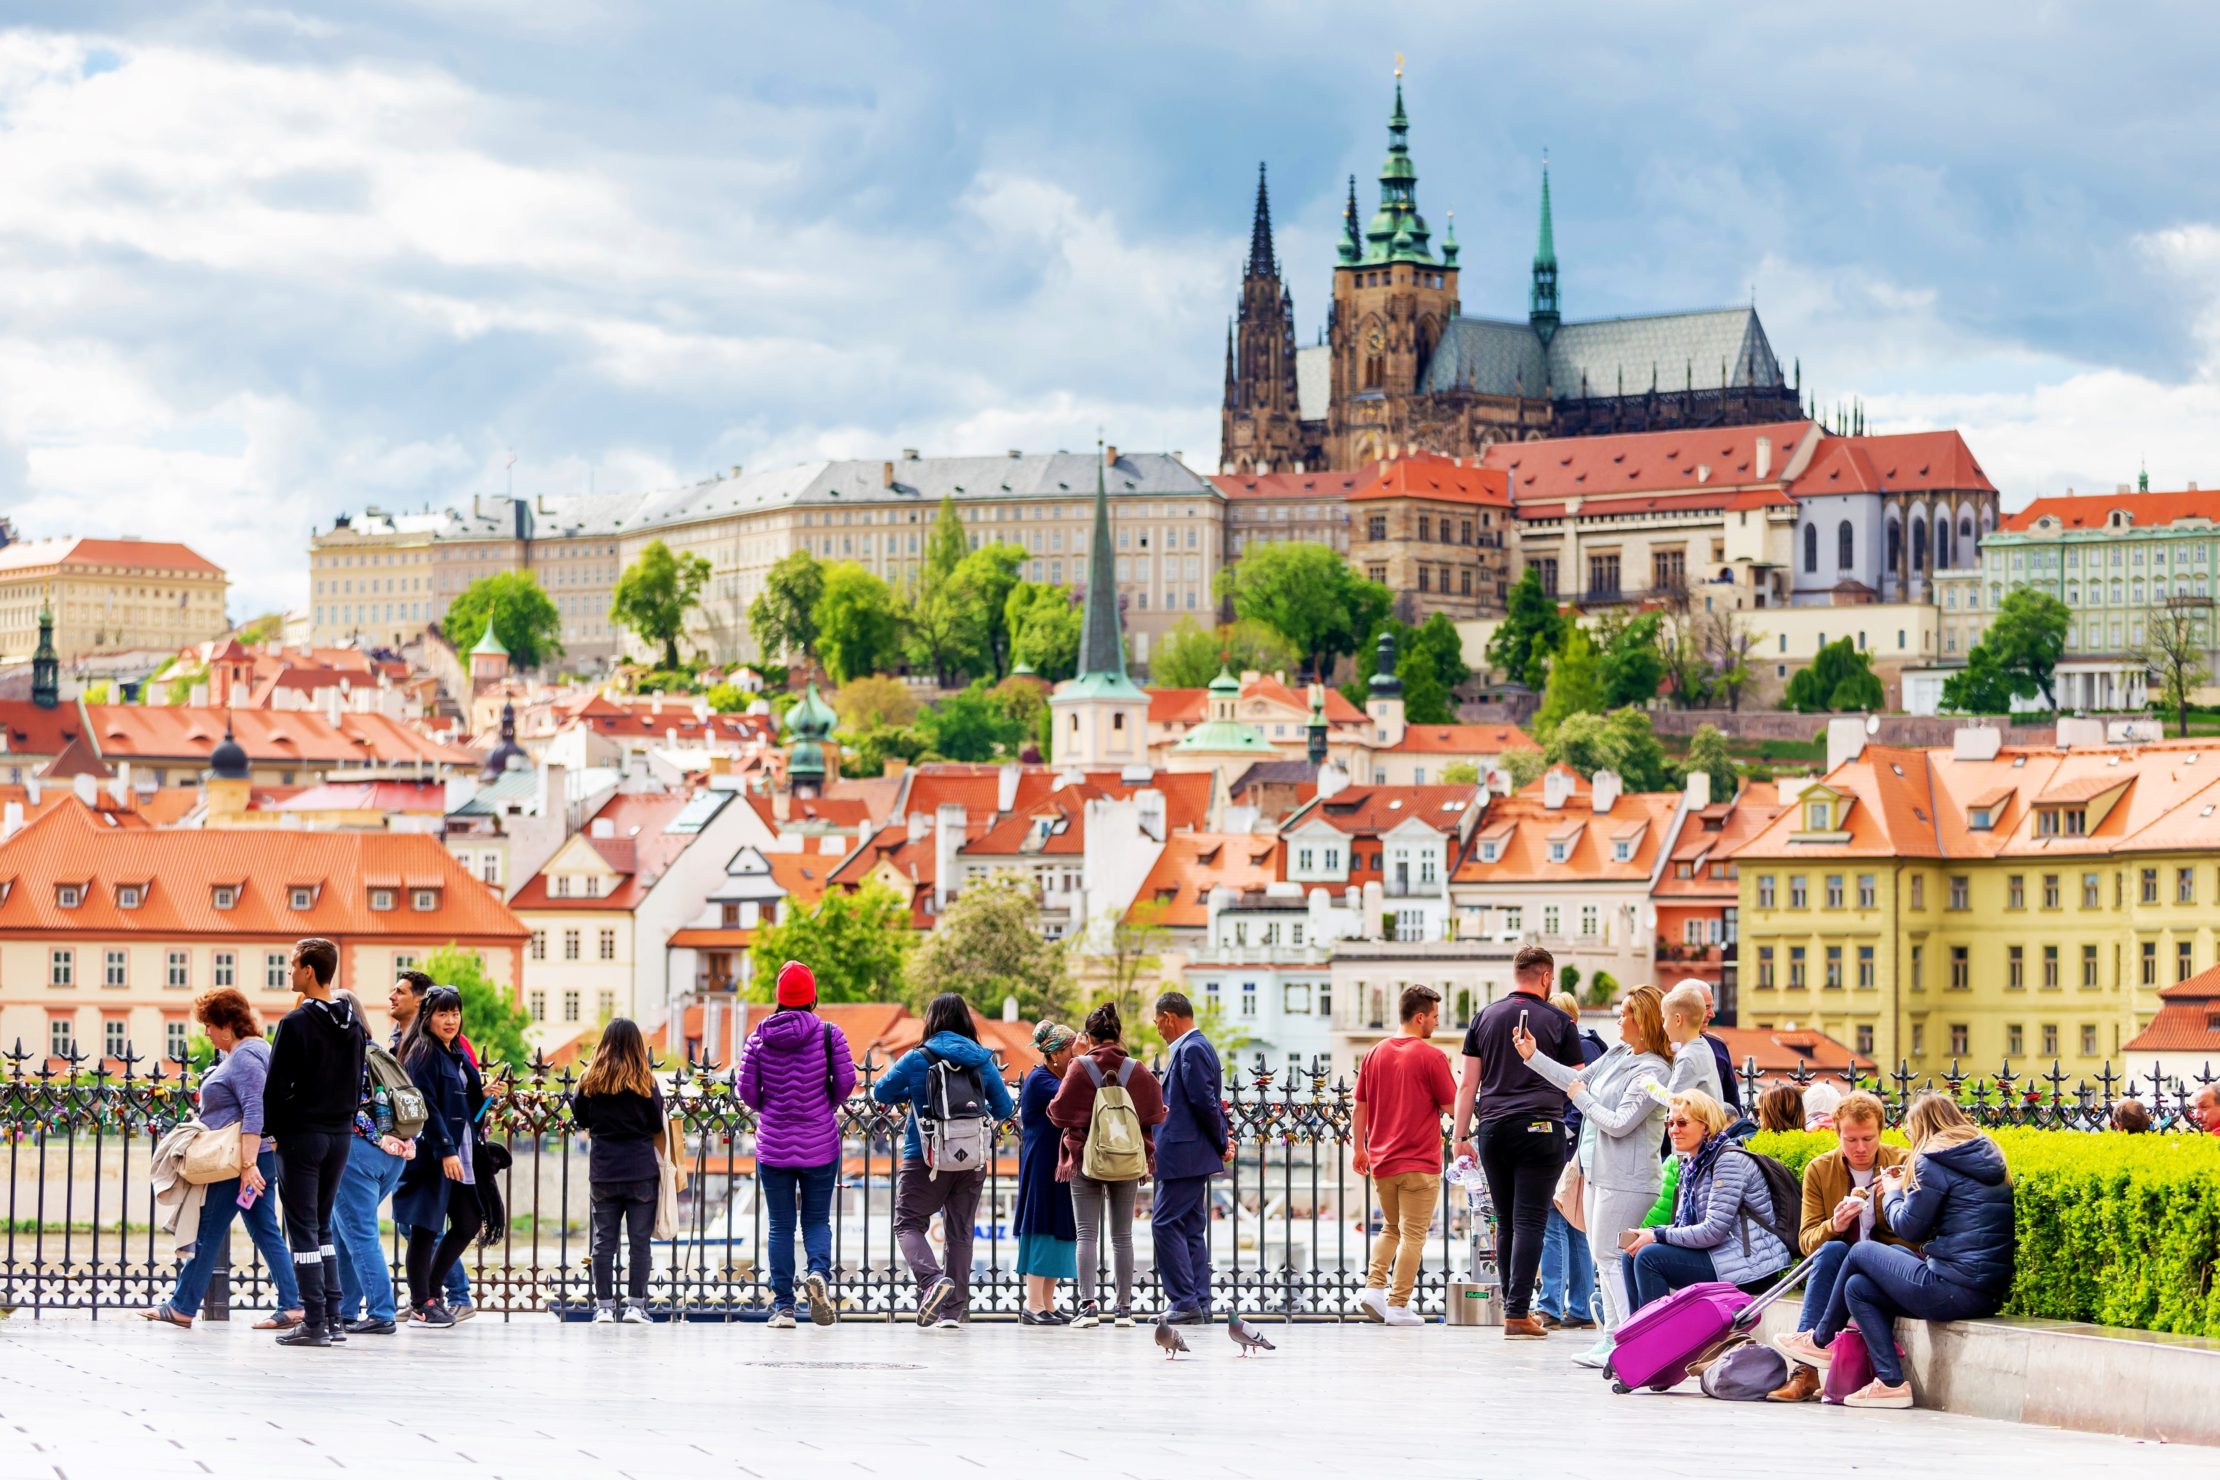 Admirando la vista del castillo de Praga